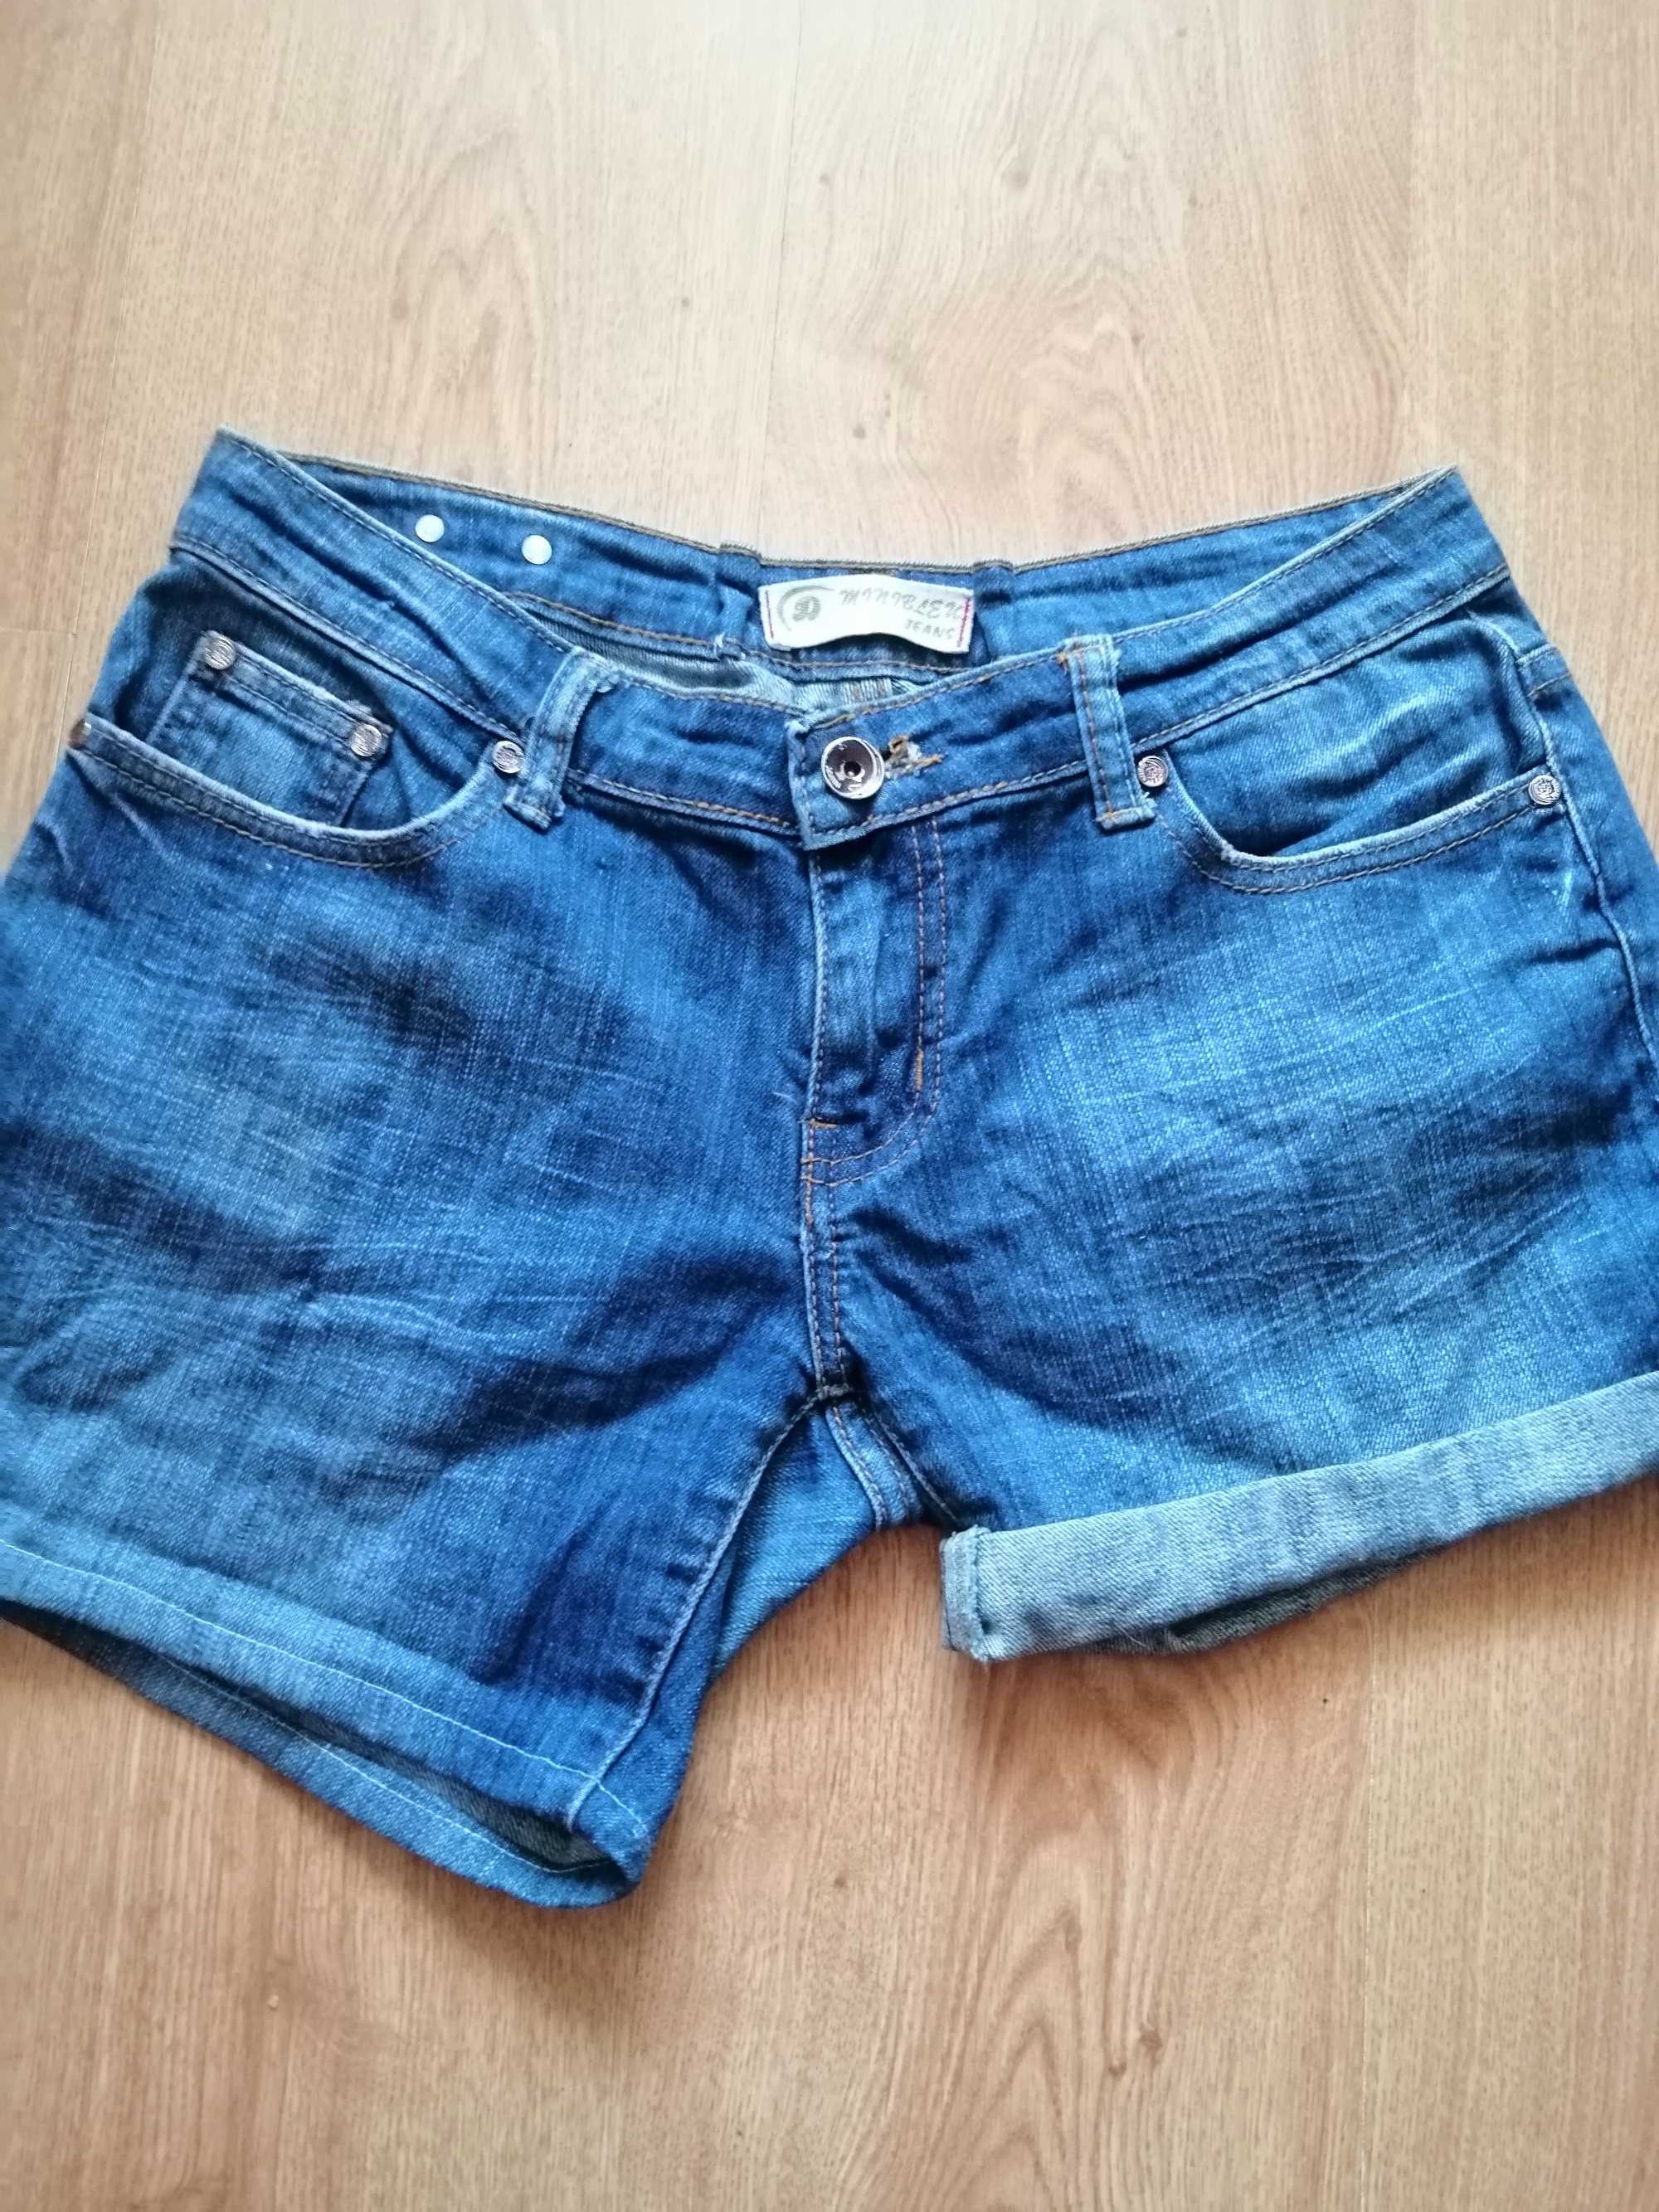 Spodenki jeans r. 31